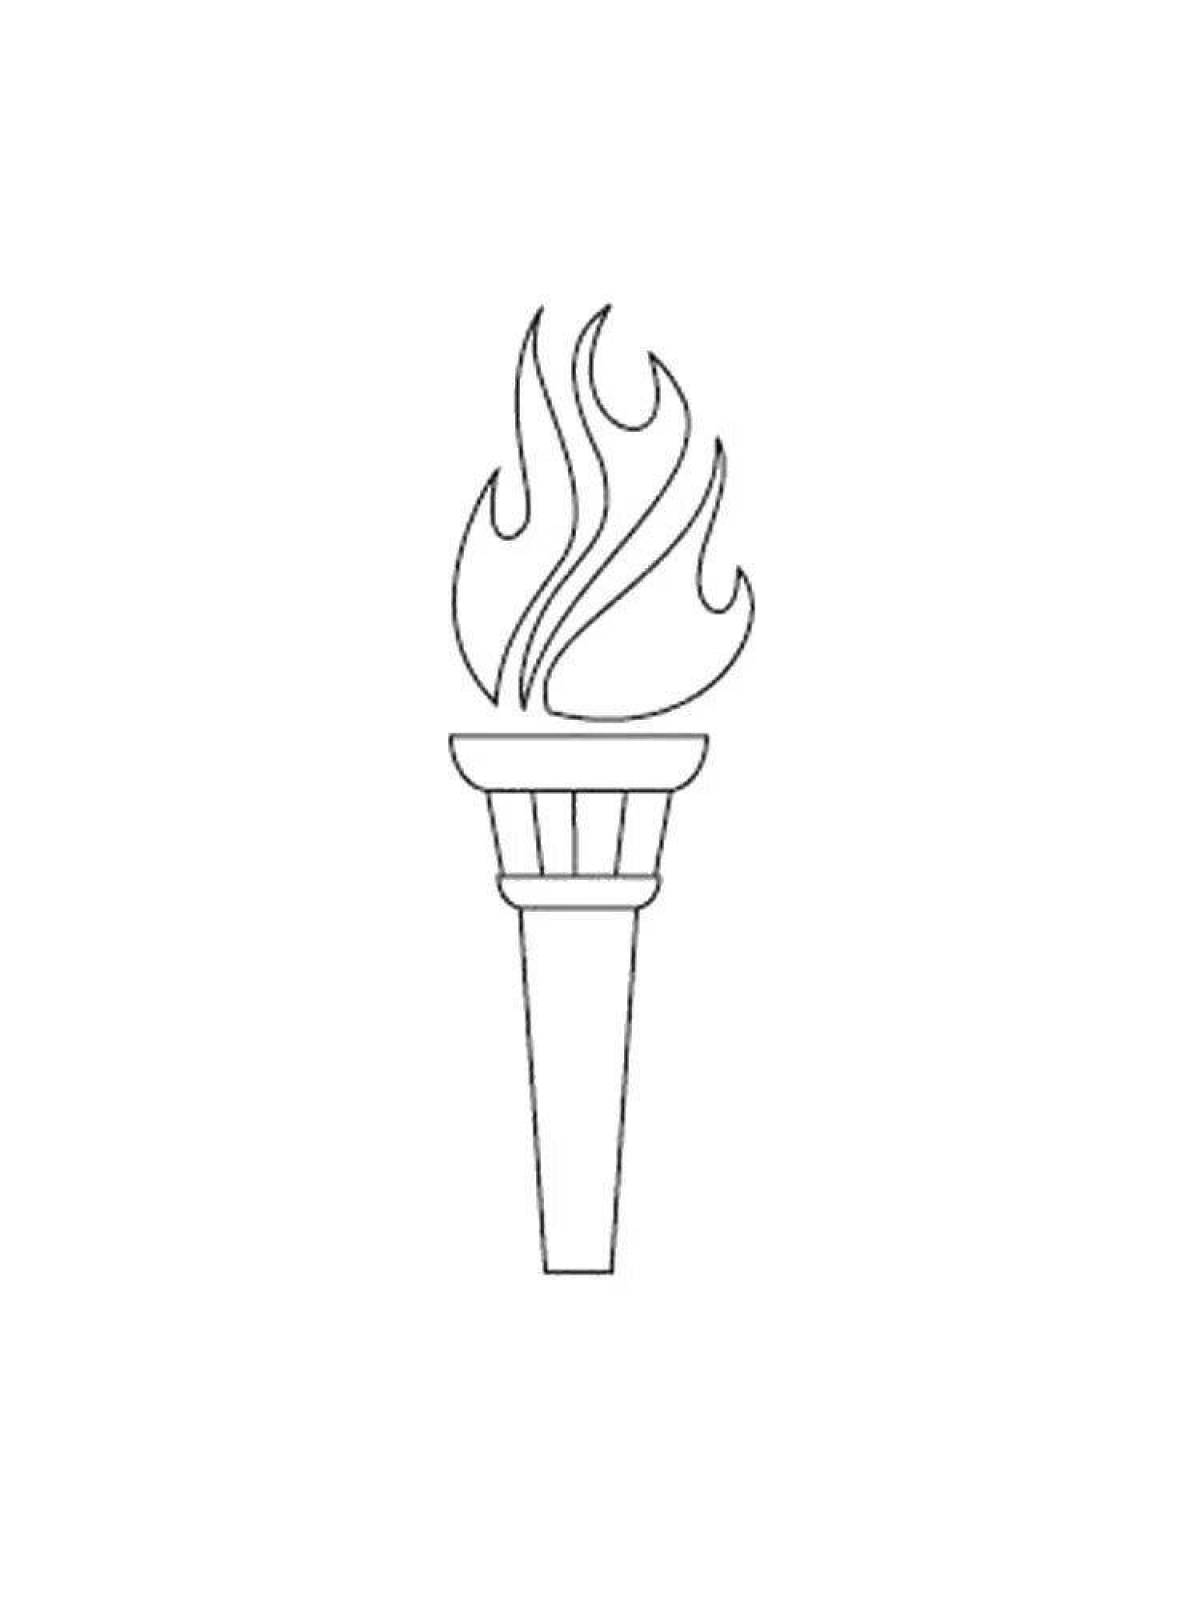 Олимпийский факел раскраска